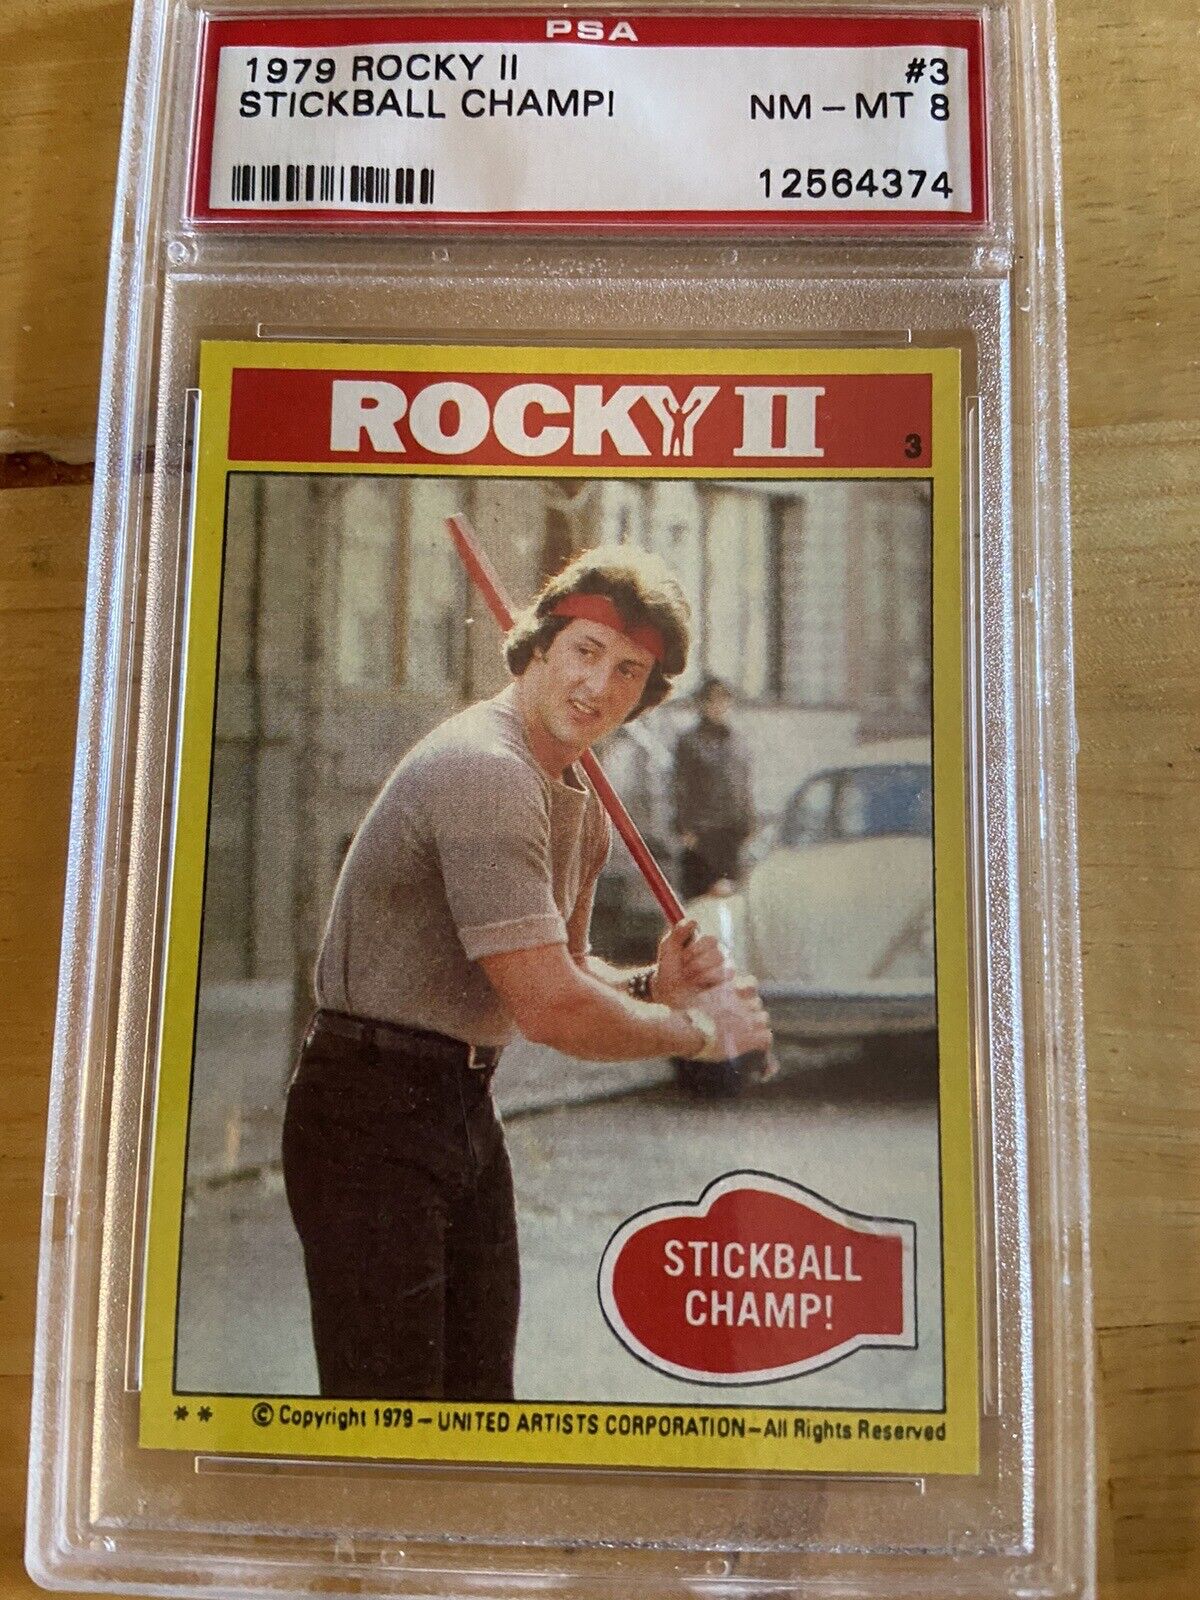 1979 Rocky 2 Psa 8 NM-Mint Graded Card lot. Low Pop